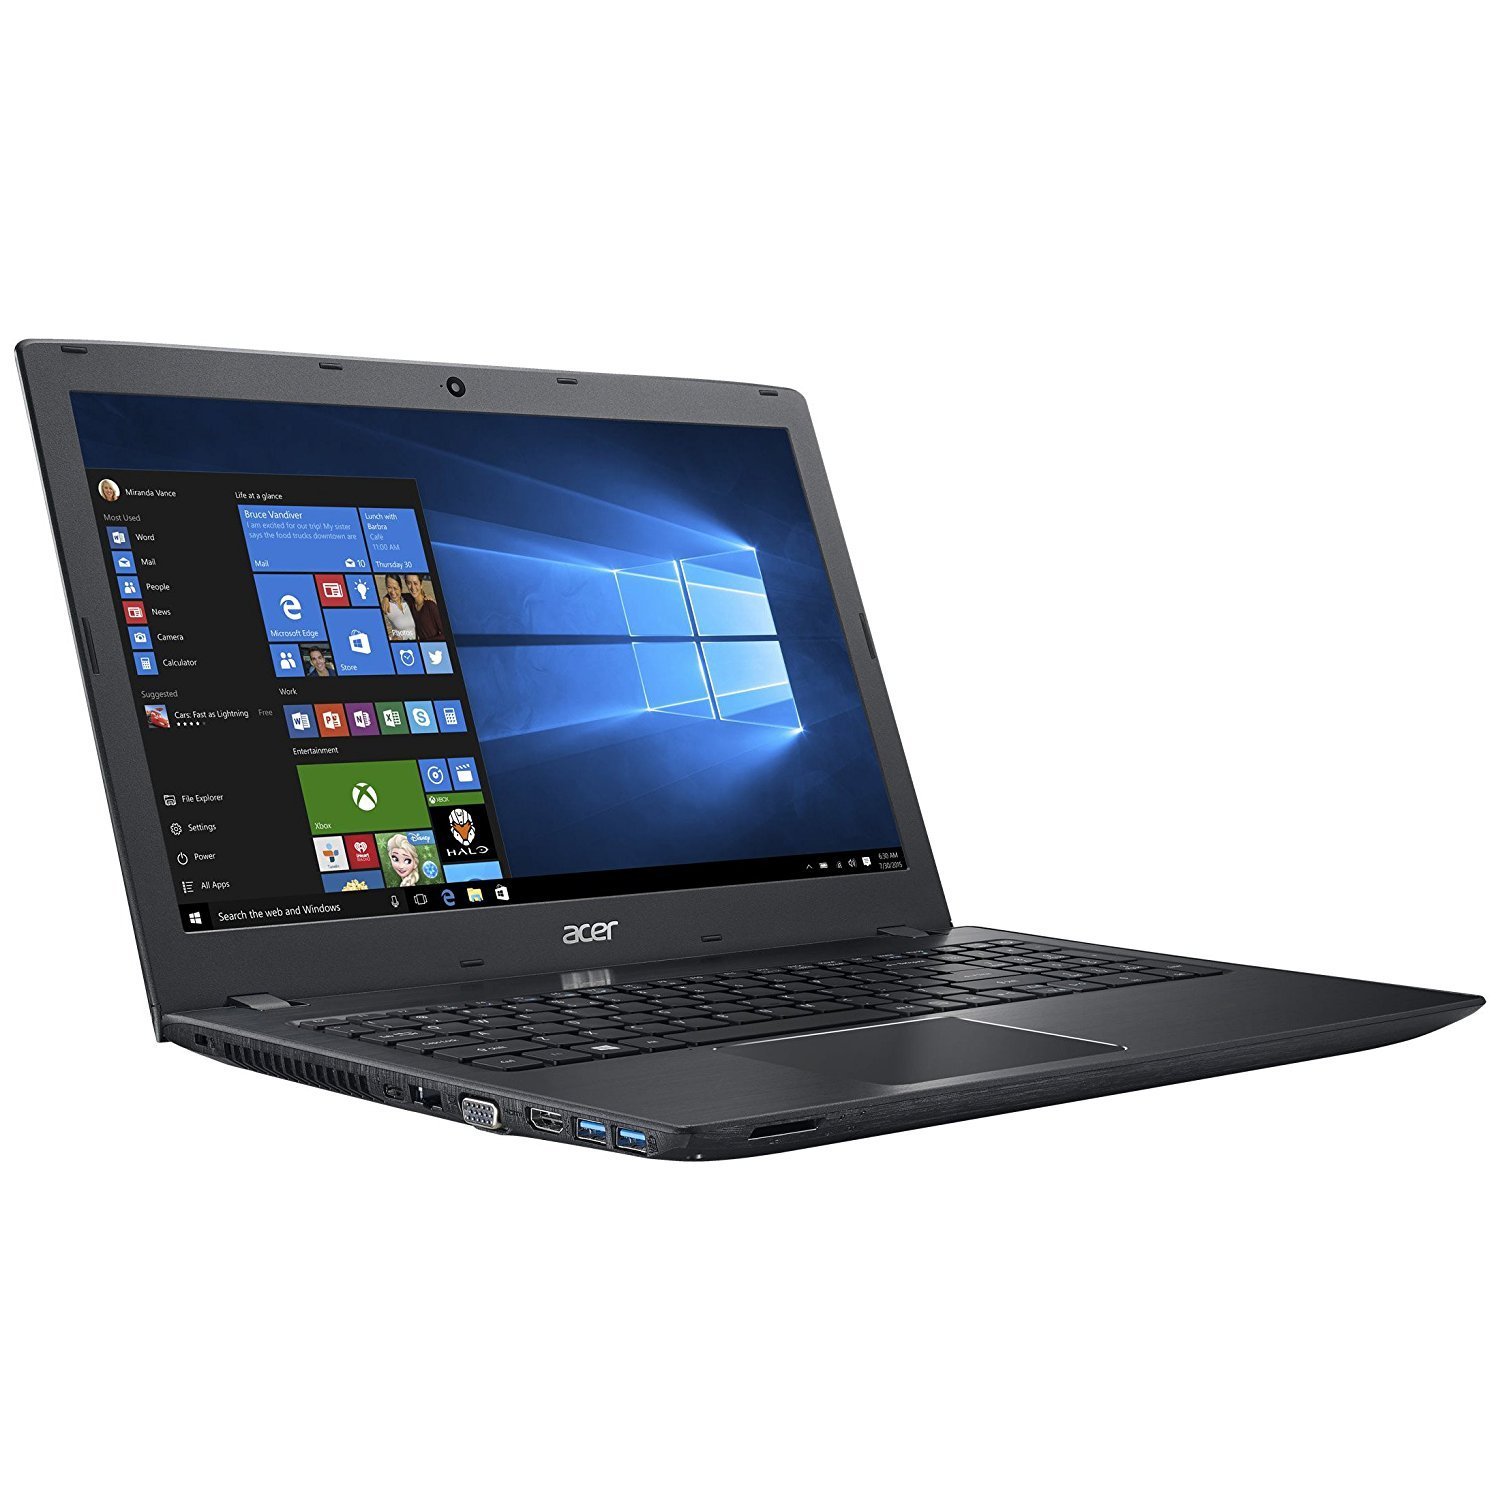 Amazon.com: Acer Aspire E 15.6-inch HD (1366x768) Laptop PC, AMD A9 ...